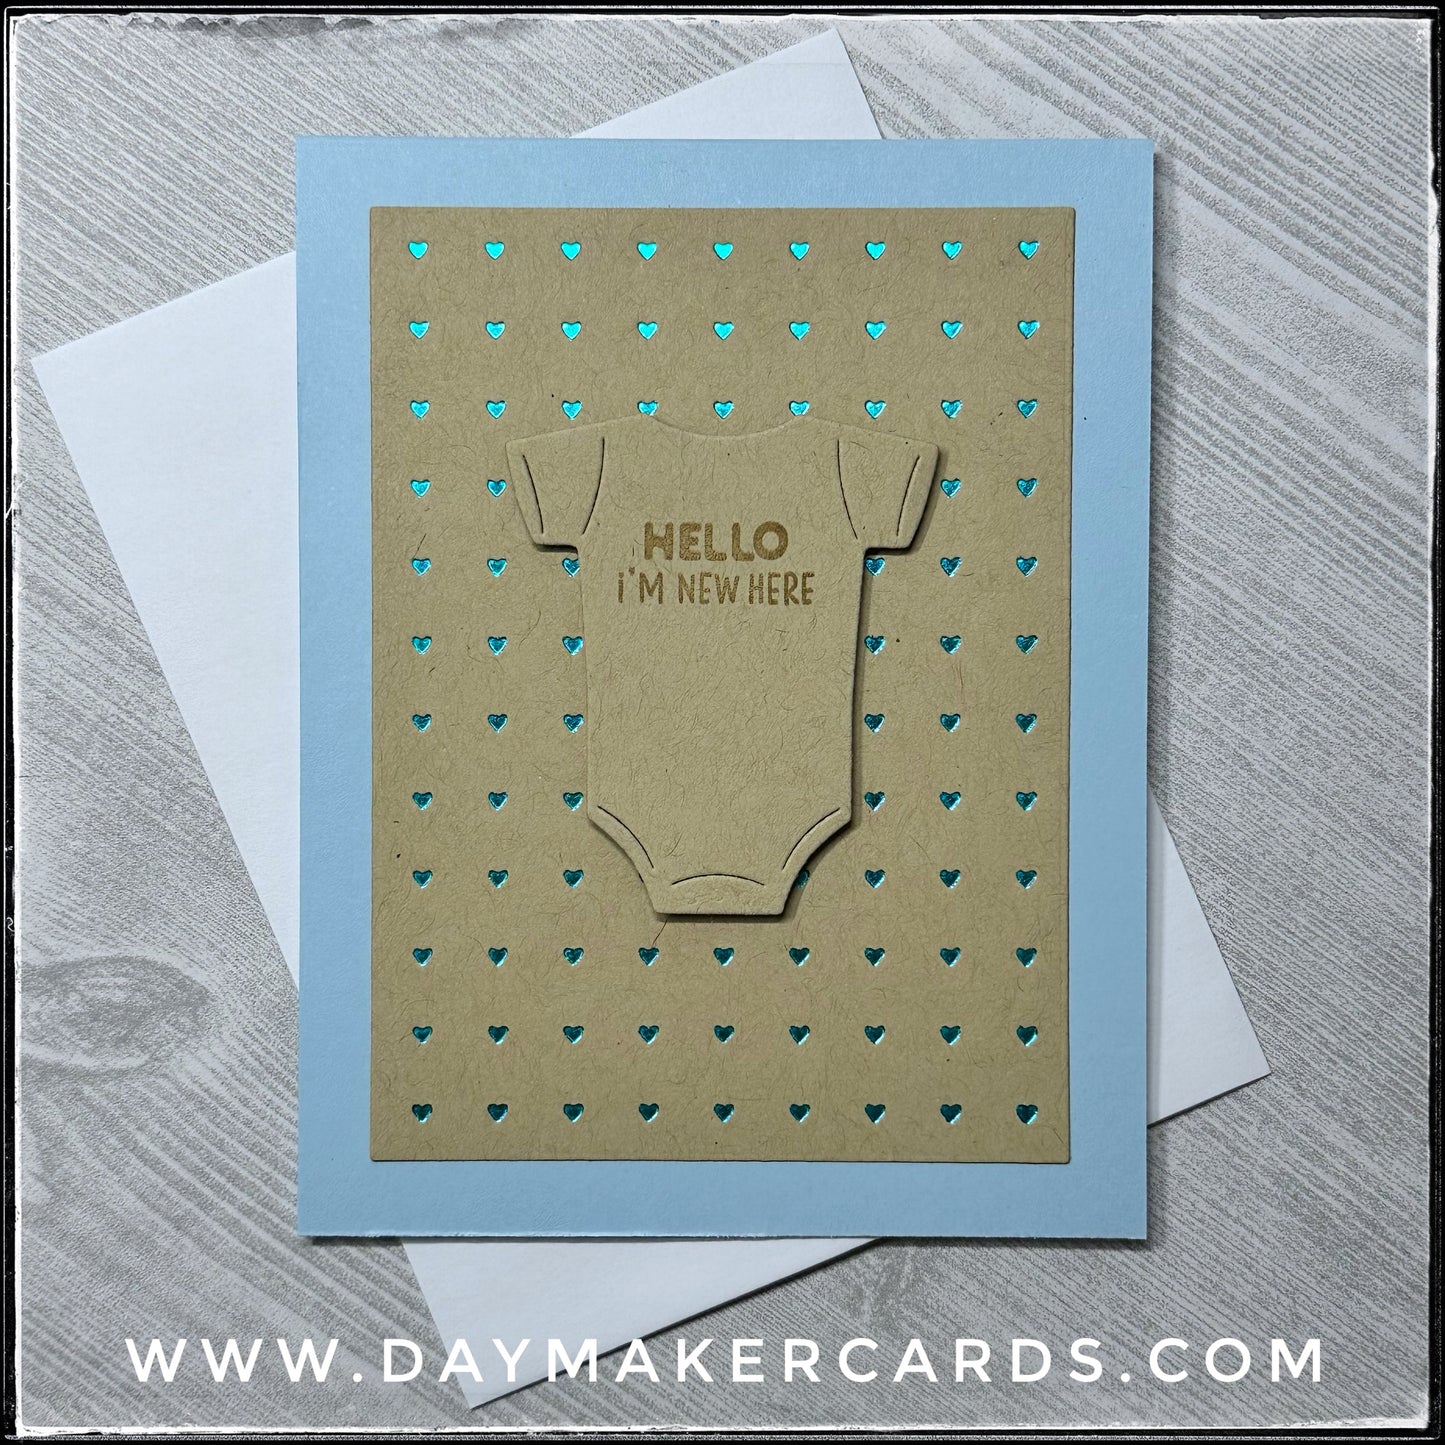 Hello - I'm New Here Handmade Card